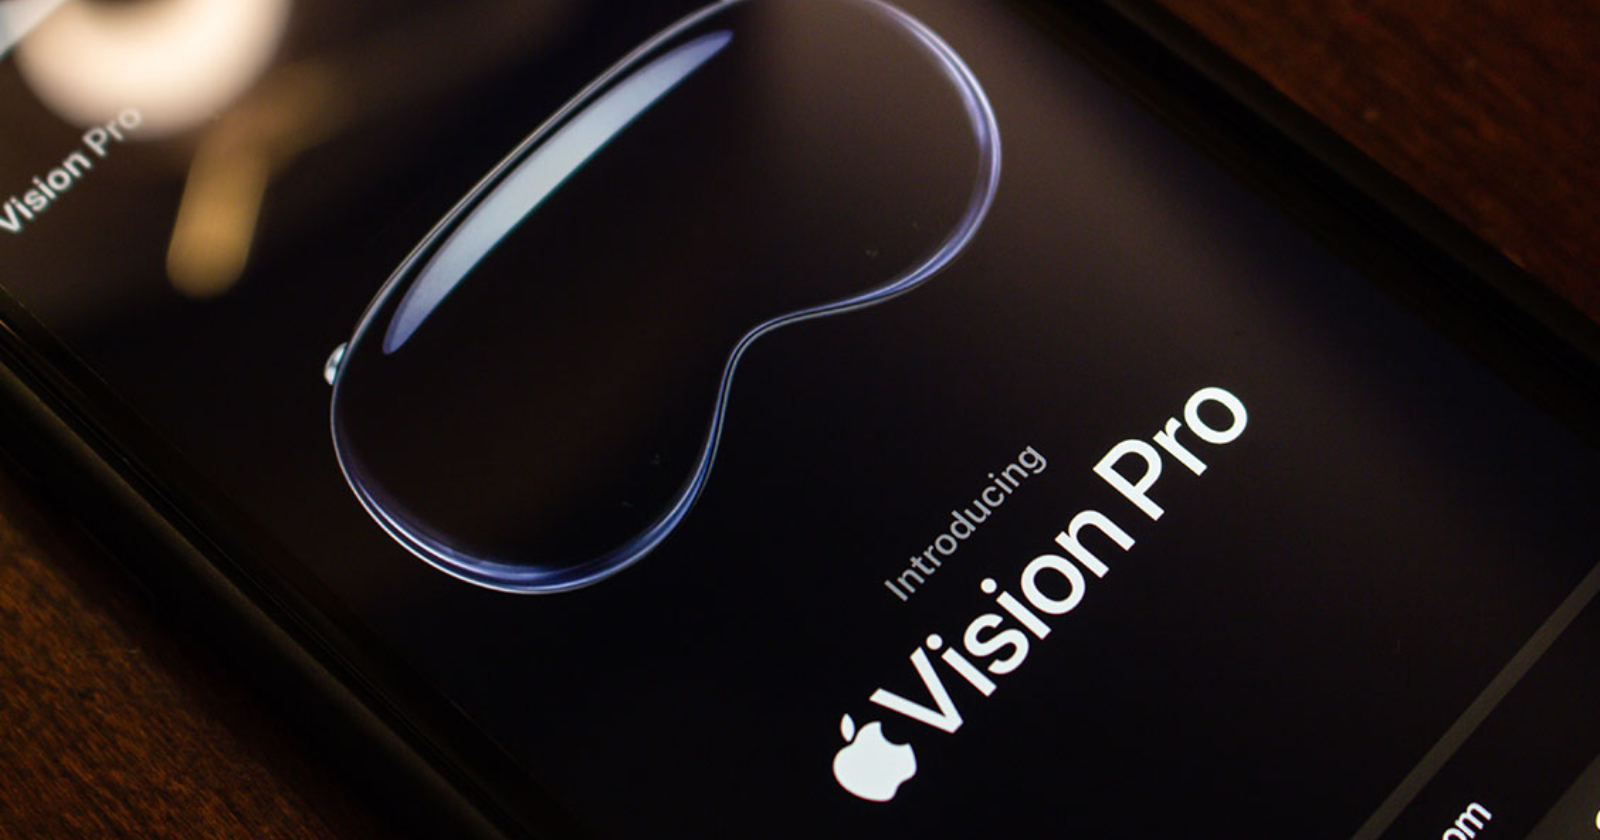 apple-vision-pro-icin-tarih-ortaya-cikti.jpg